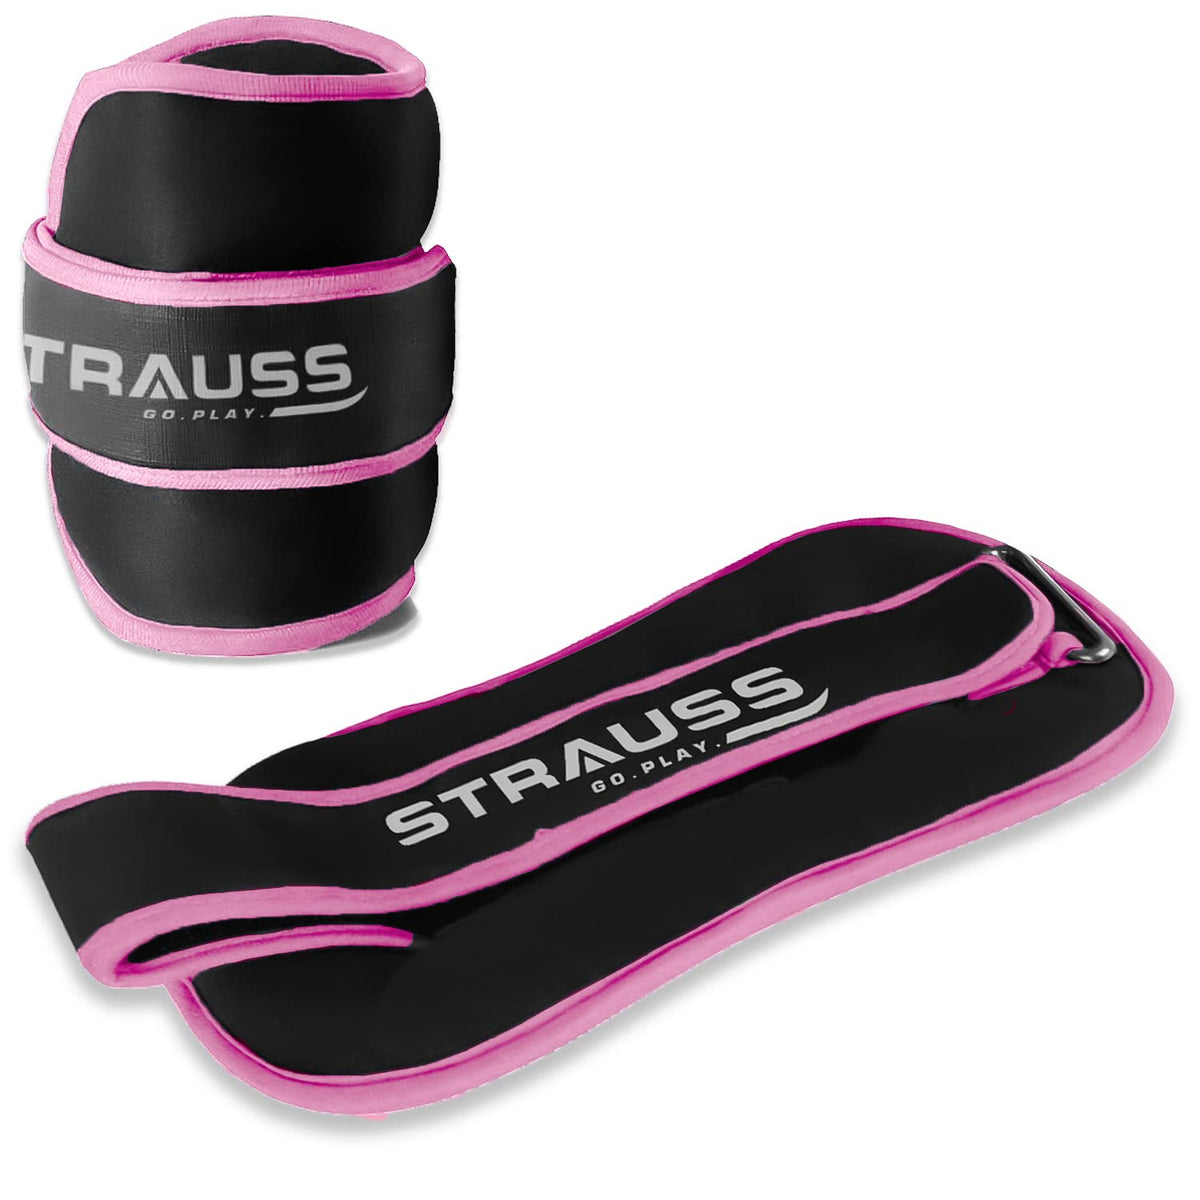 Strauss Round Shape Ankle Weight, 1 Kg (Each), Pair, (Pink)